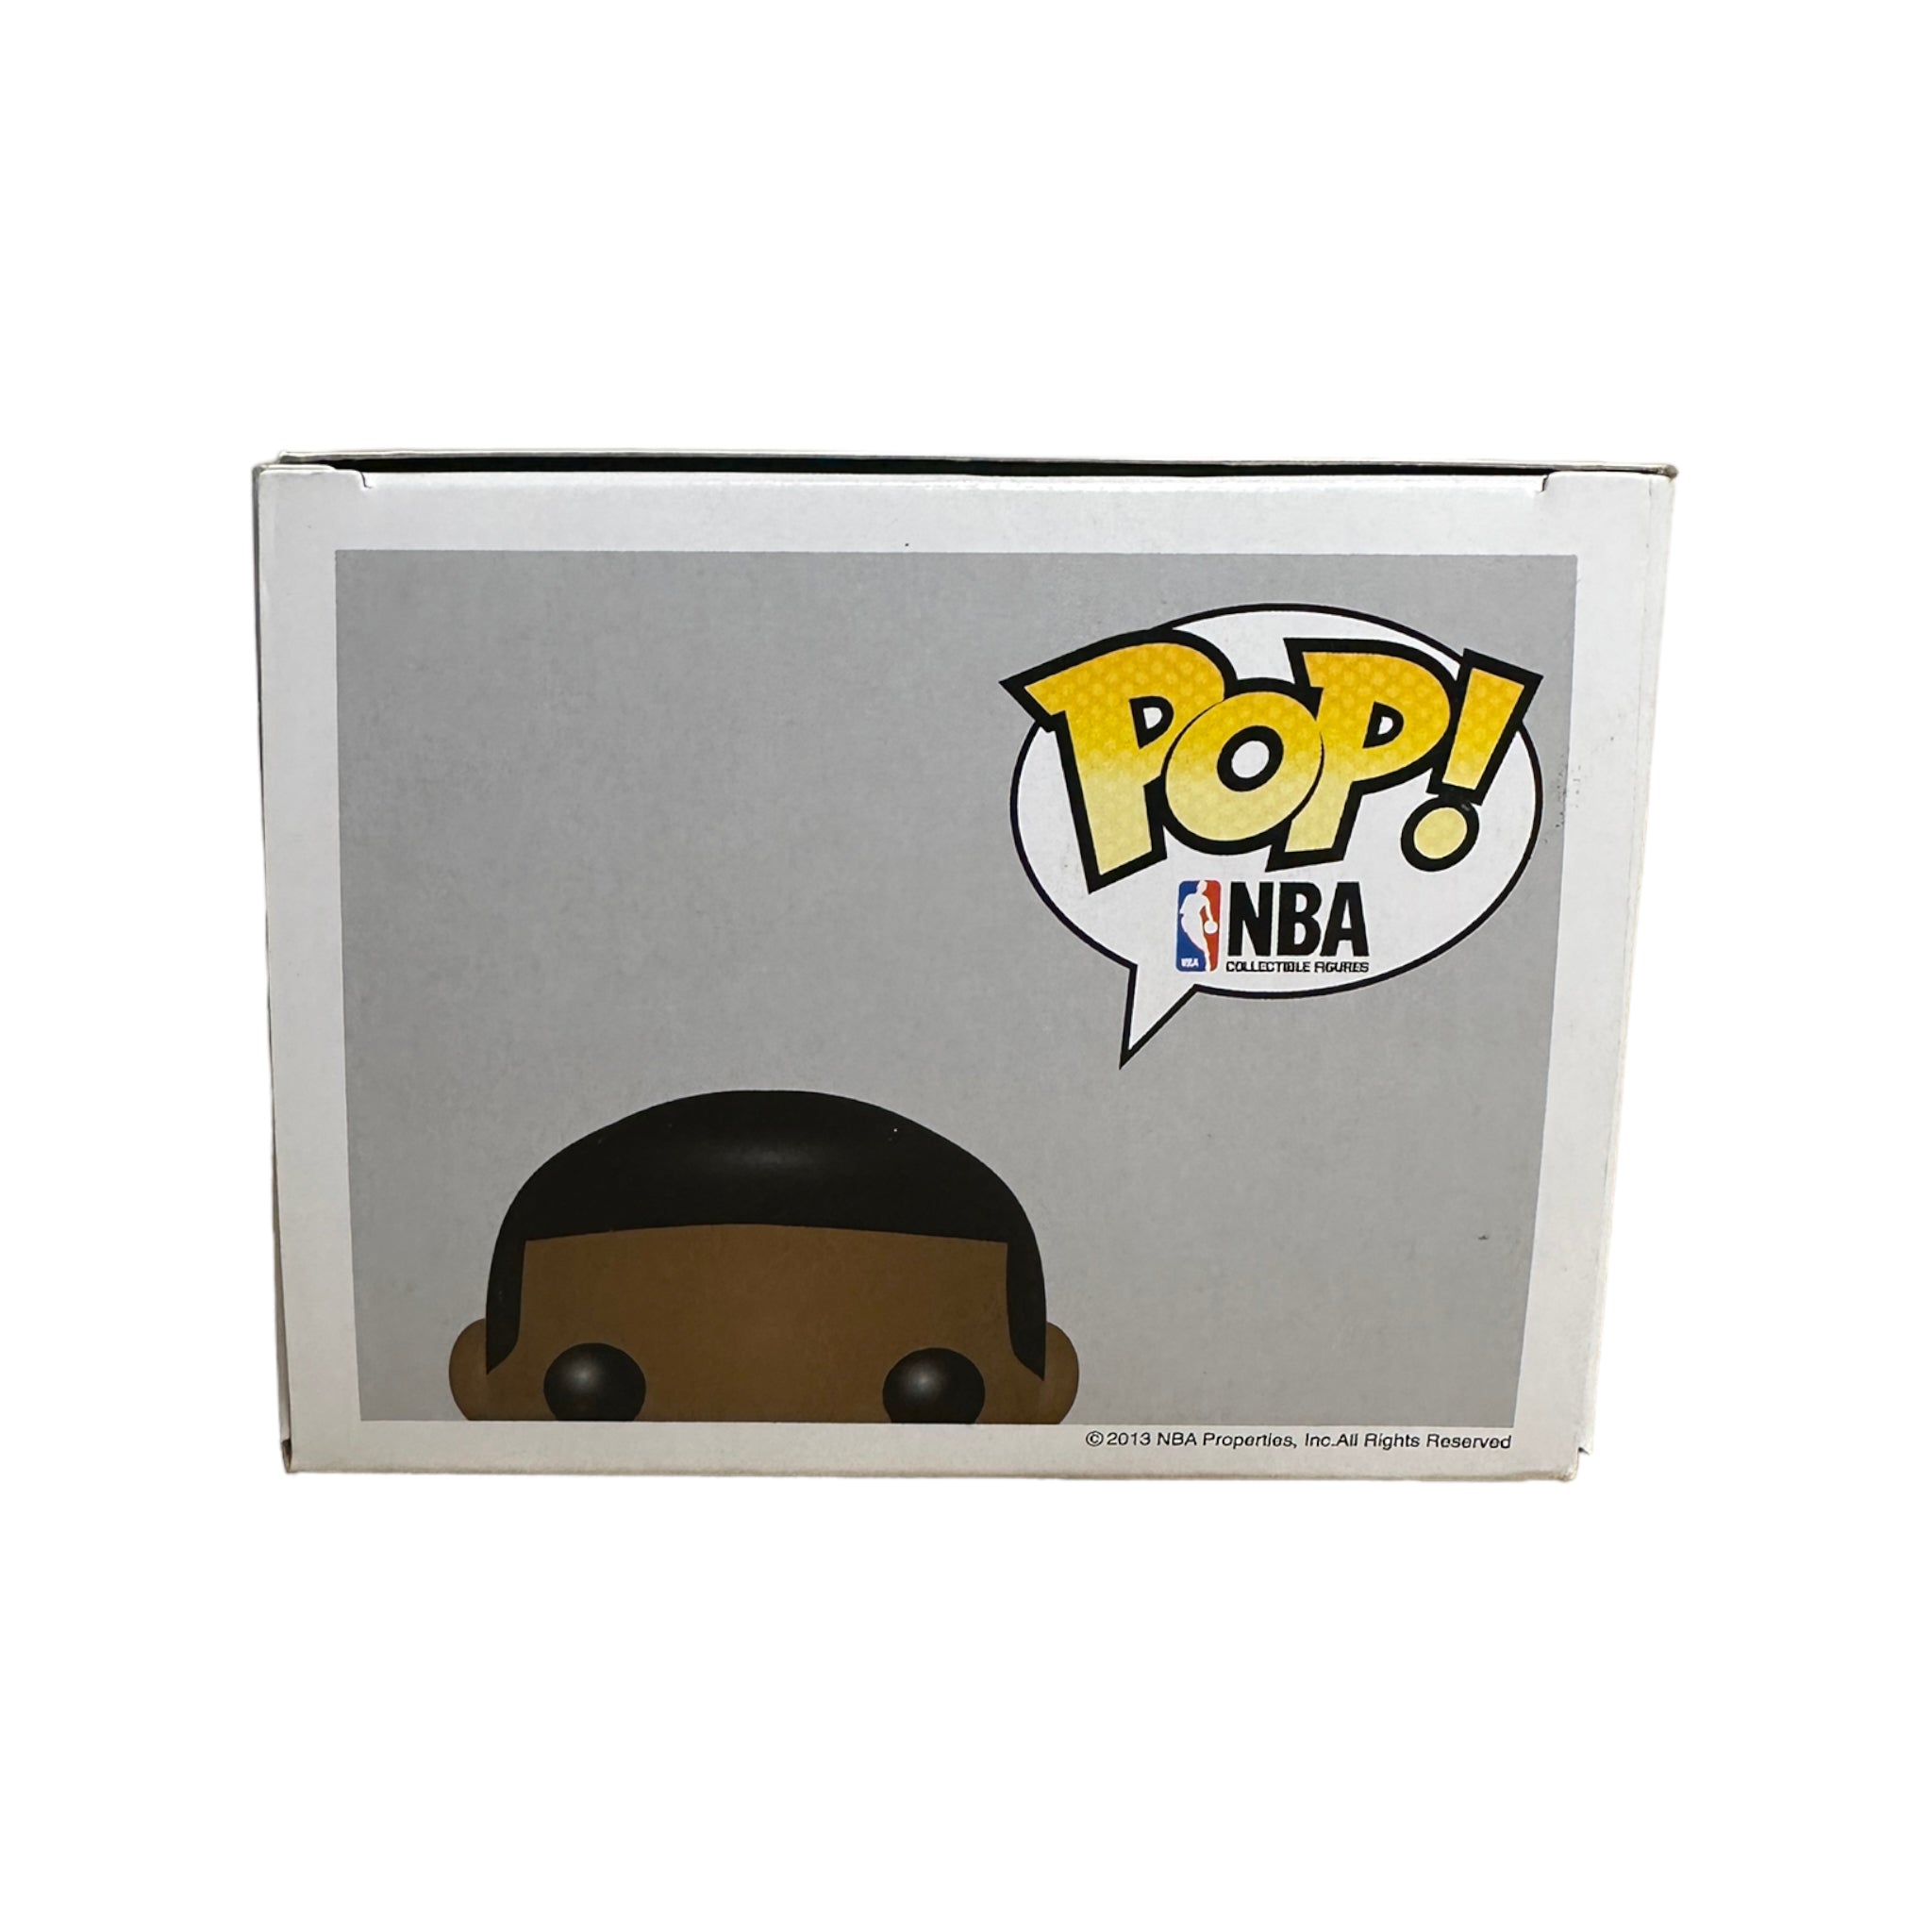 Dwayne Wade #18 Funko Pop! - NBA - 2013 Pop! - Condition 7/10